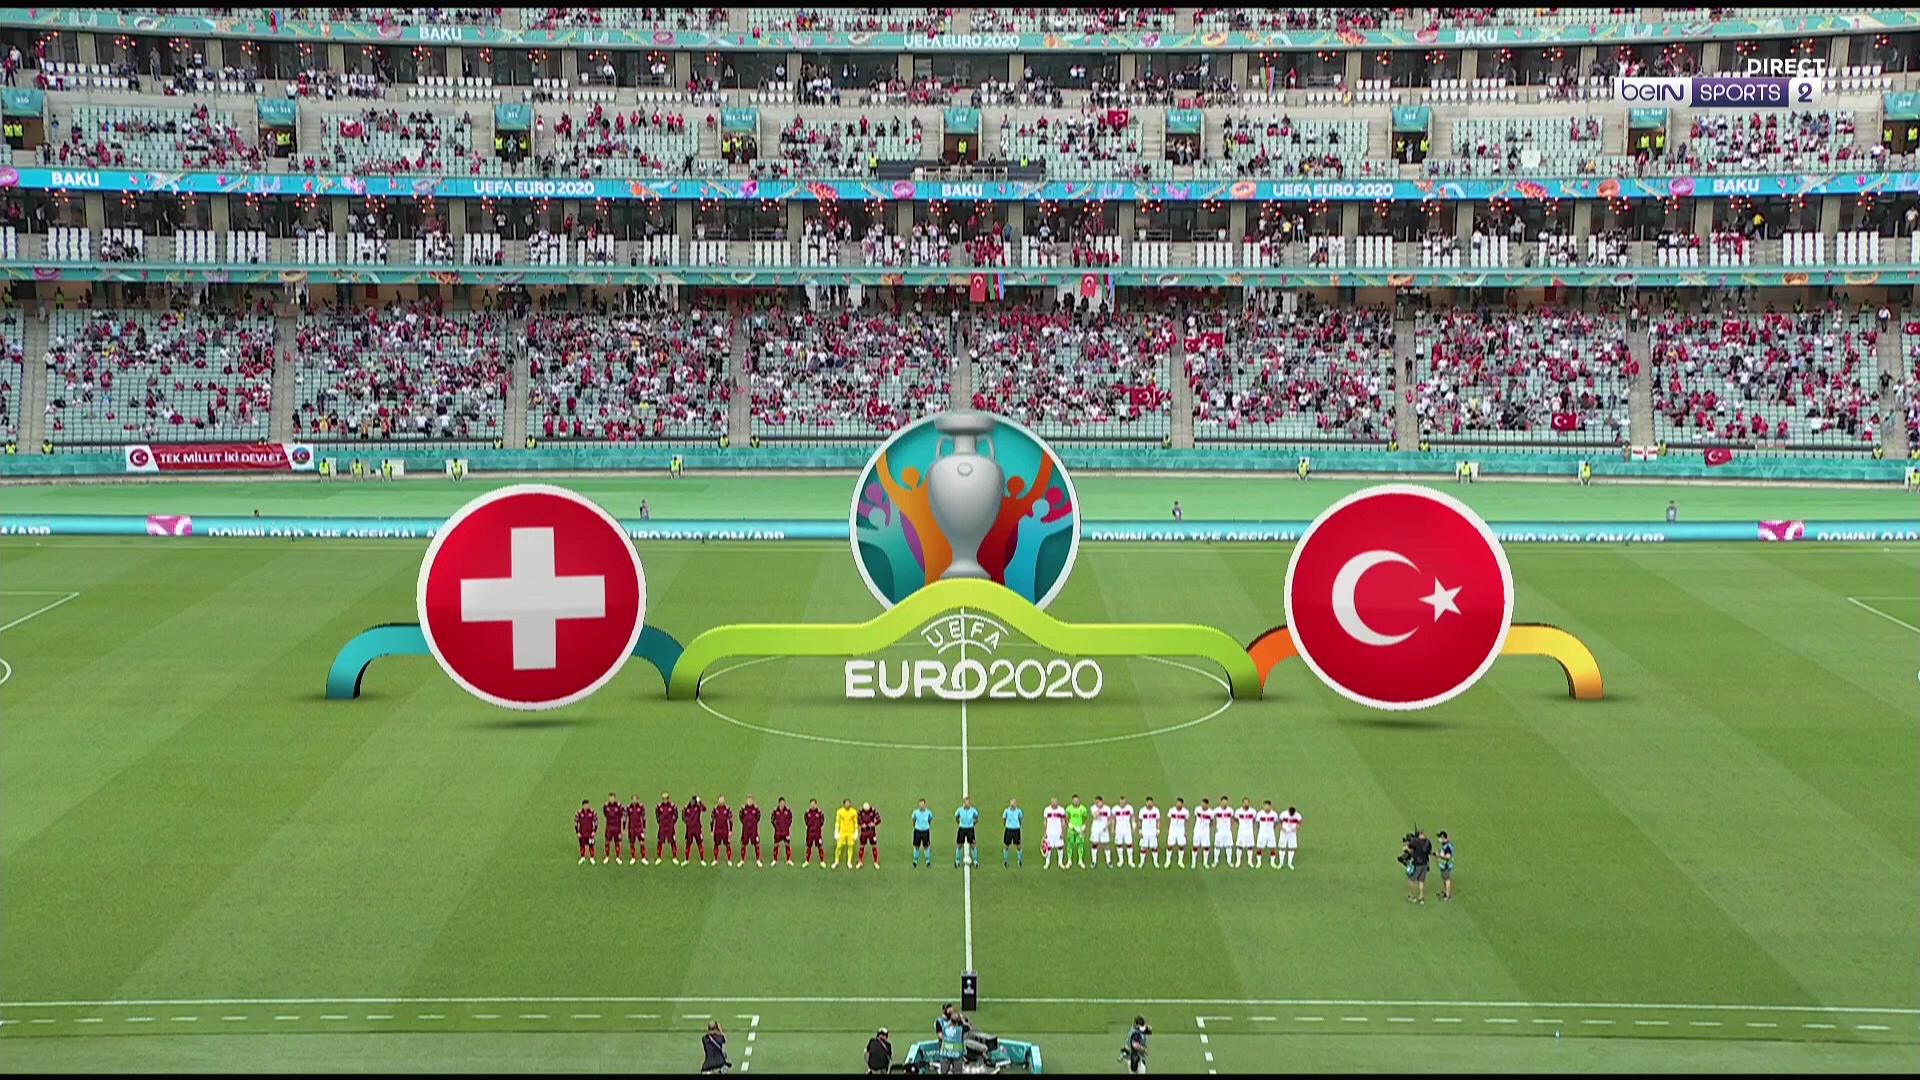 Switzerland vs Turkey